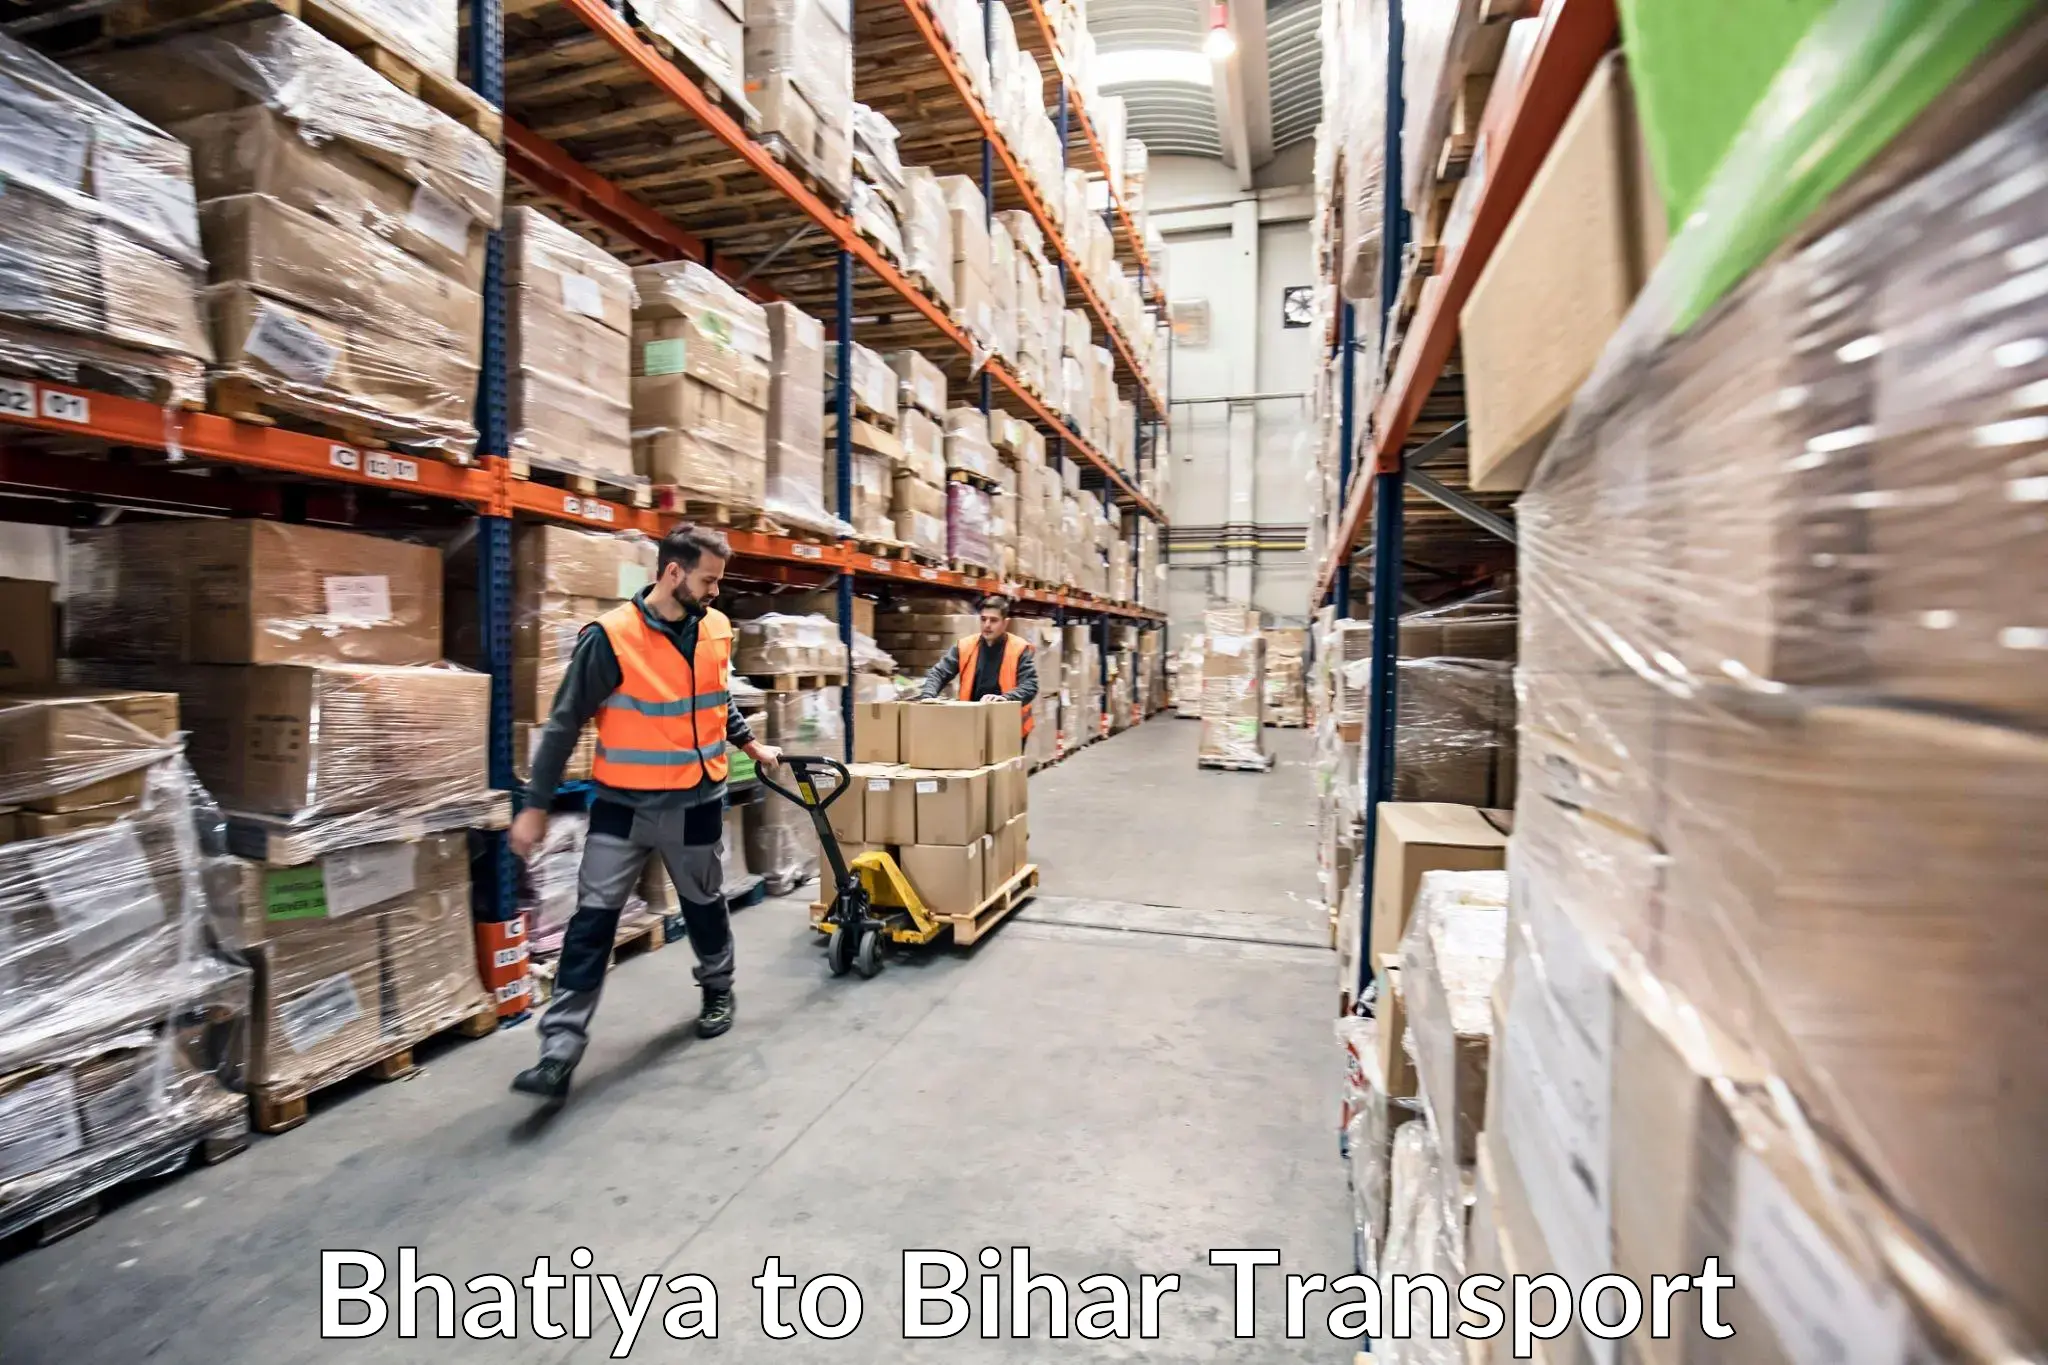 Truck transport companies in India Bhatiya to Fatwah